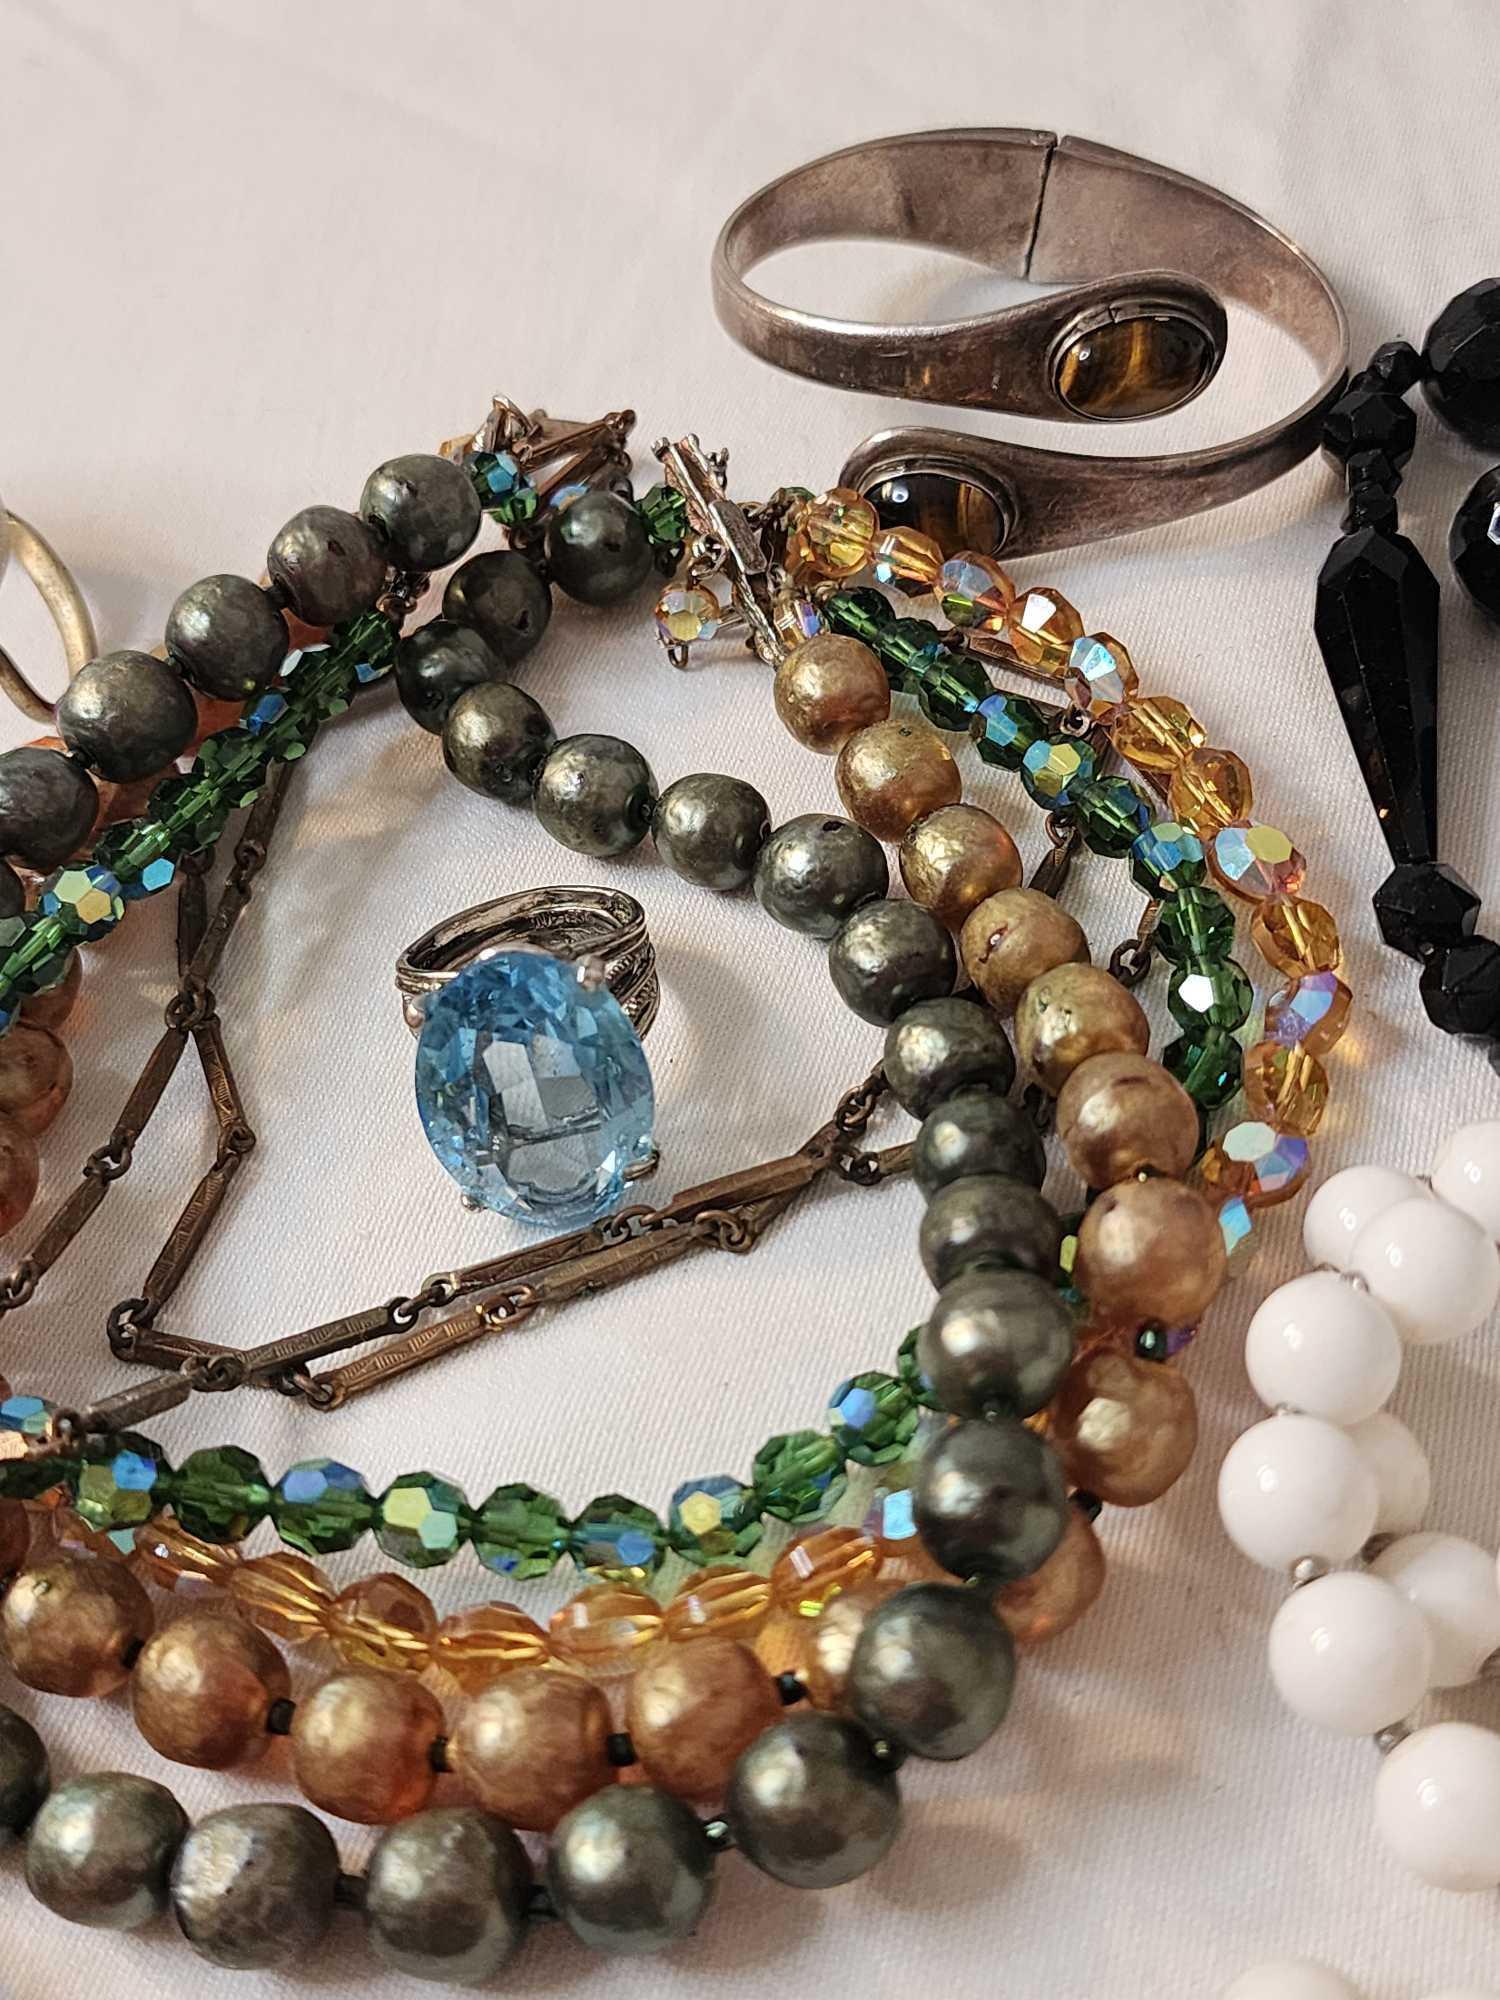 Vintage costume jewelry lot: beads, rhinestones, sets